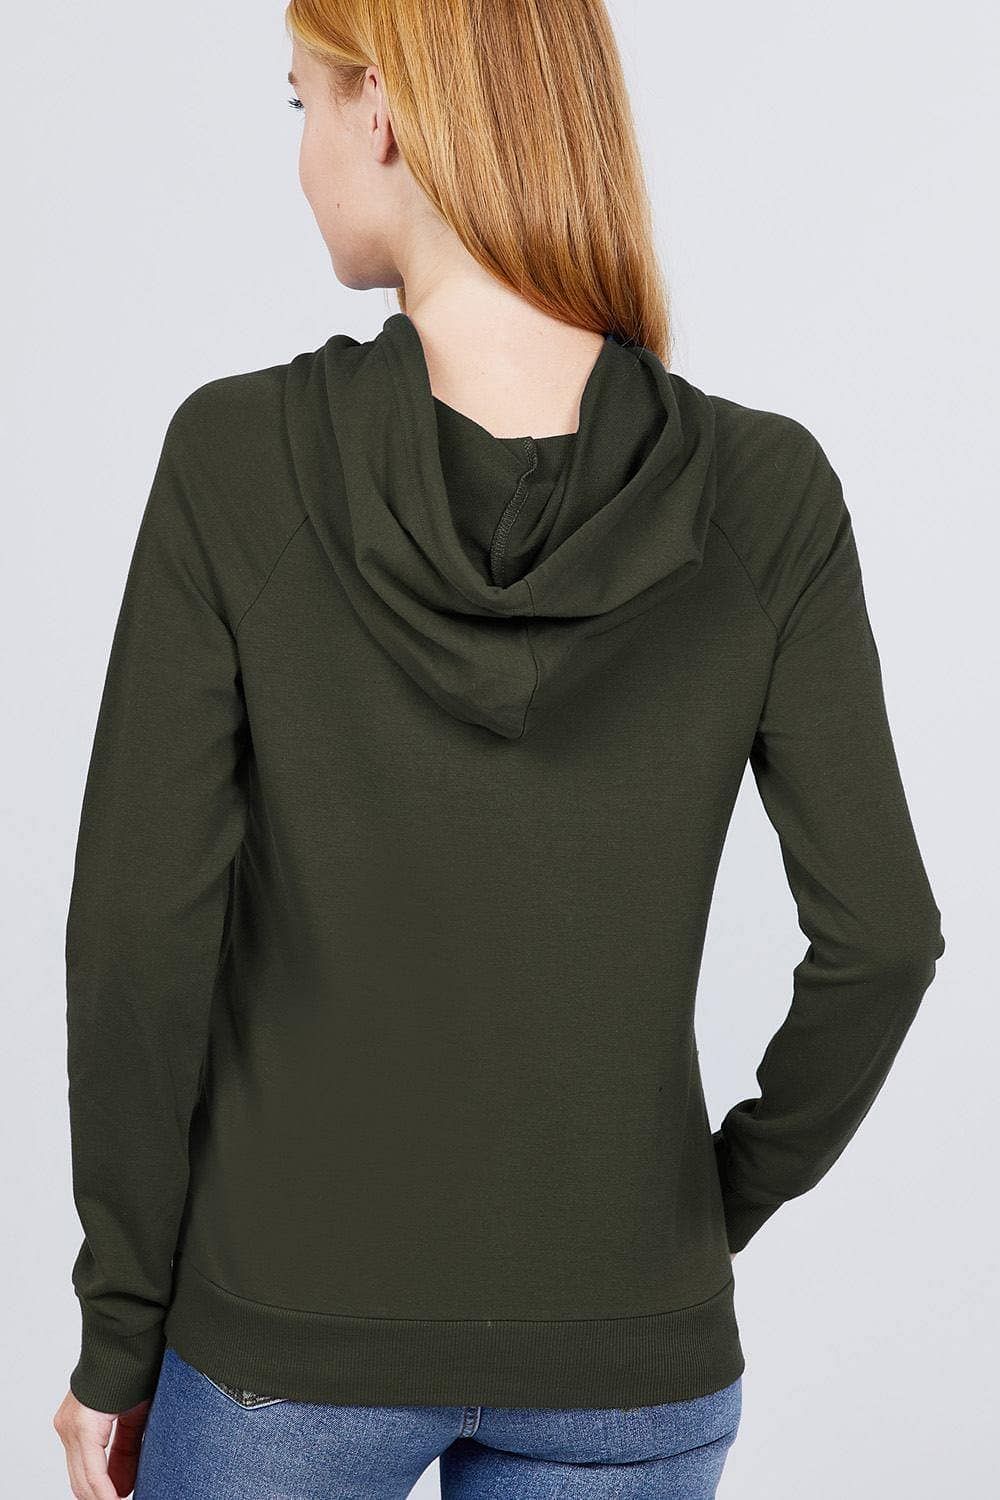 Dark Olive French Terry Long Sleeve Sweatshirt - Shopping Therapy, LLC Sweatshirt